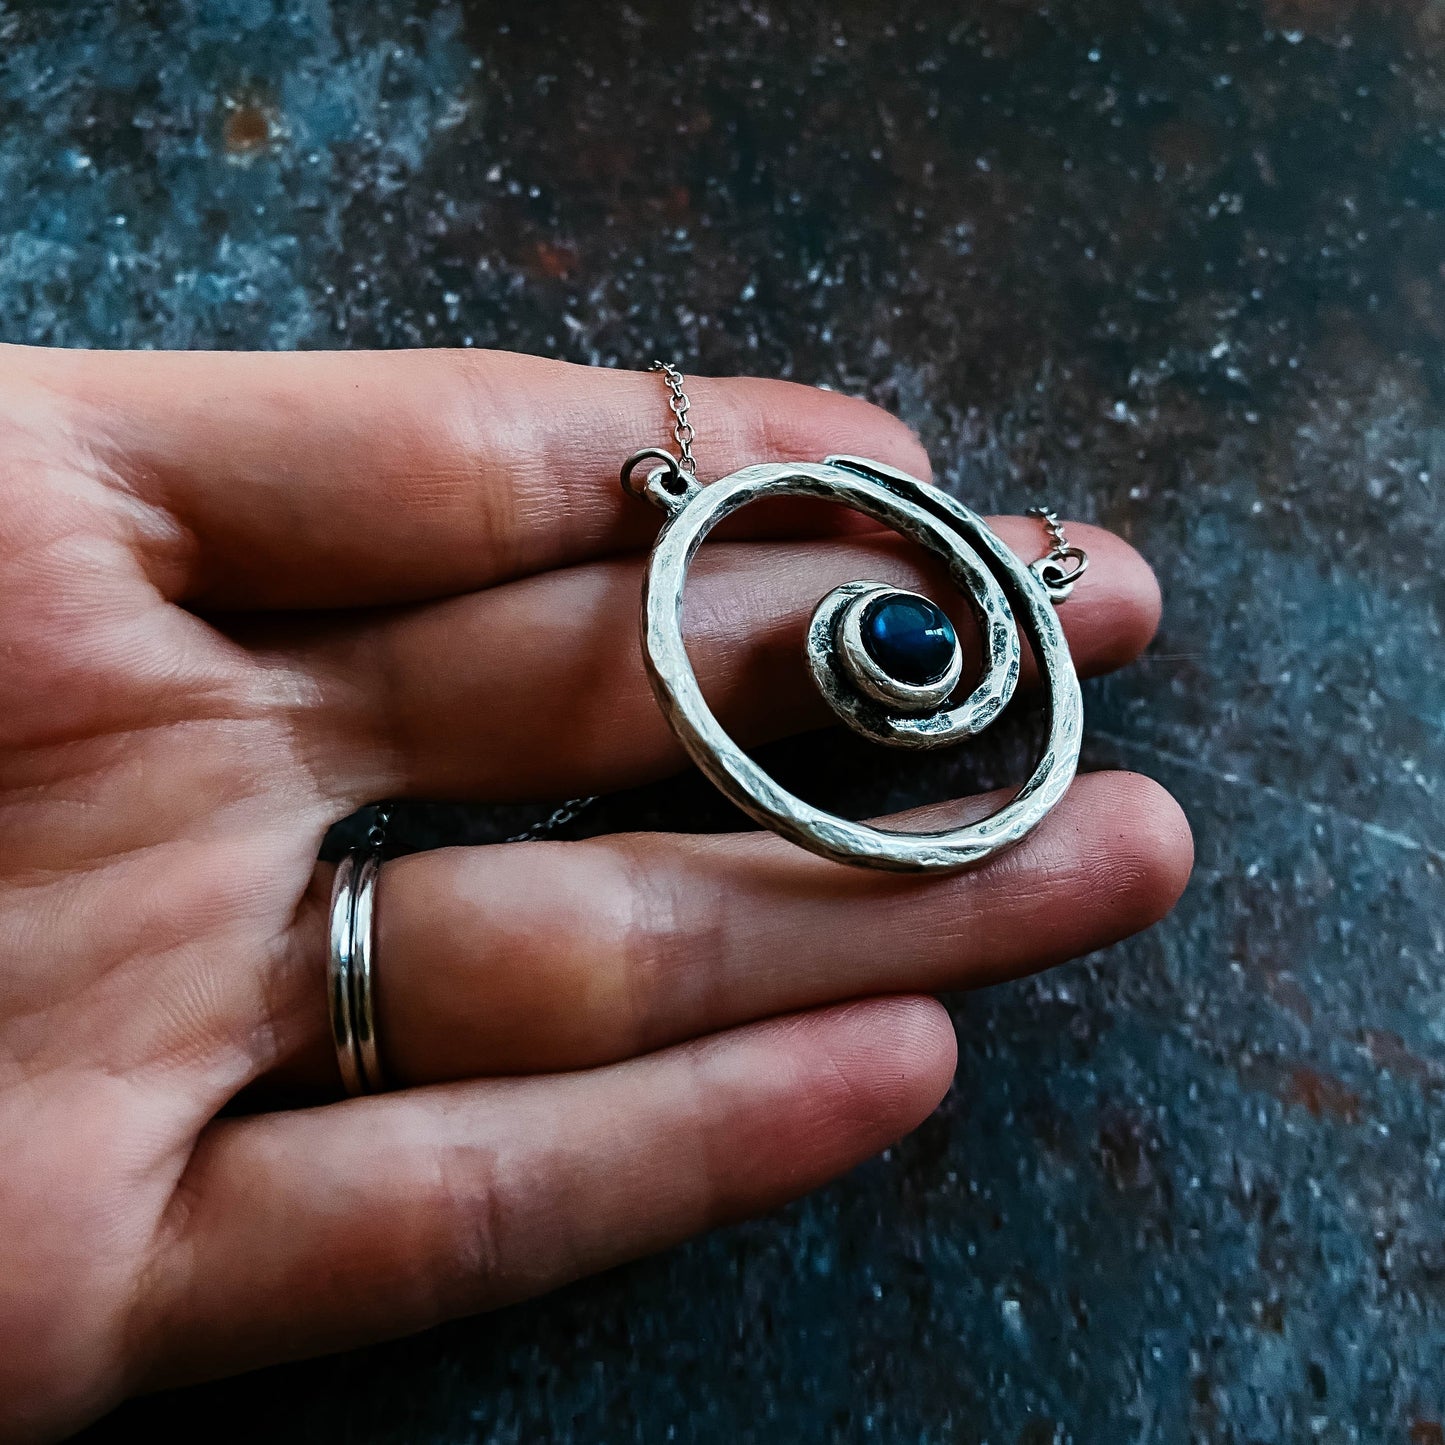 Milky Way Necklace - Spiral Silver Pendant with Labradorite Necklace Yugen Handmade   